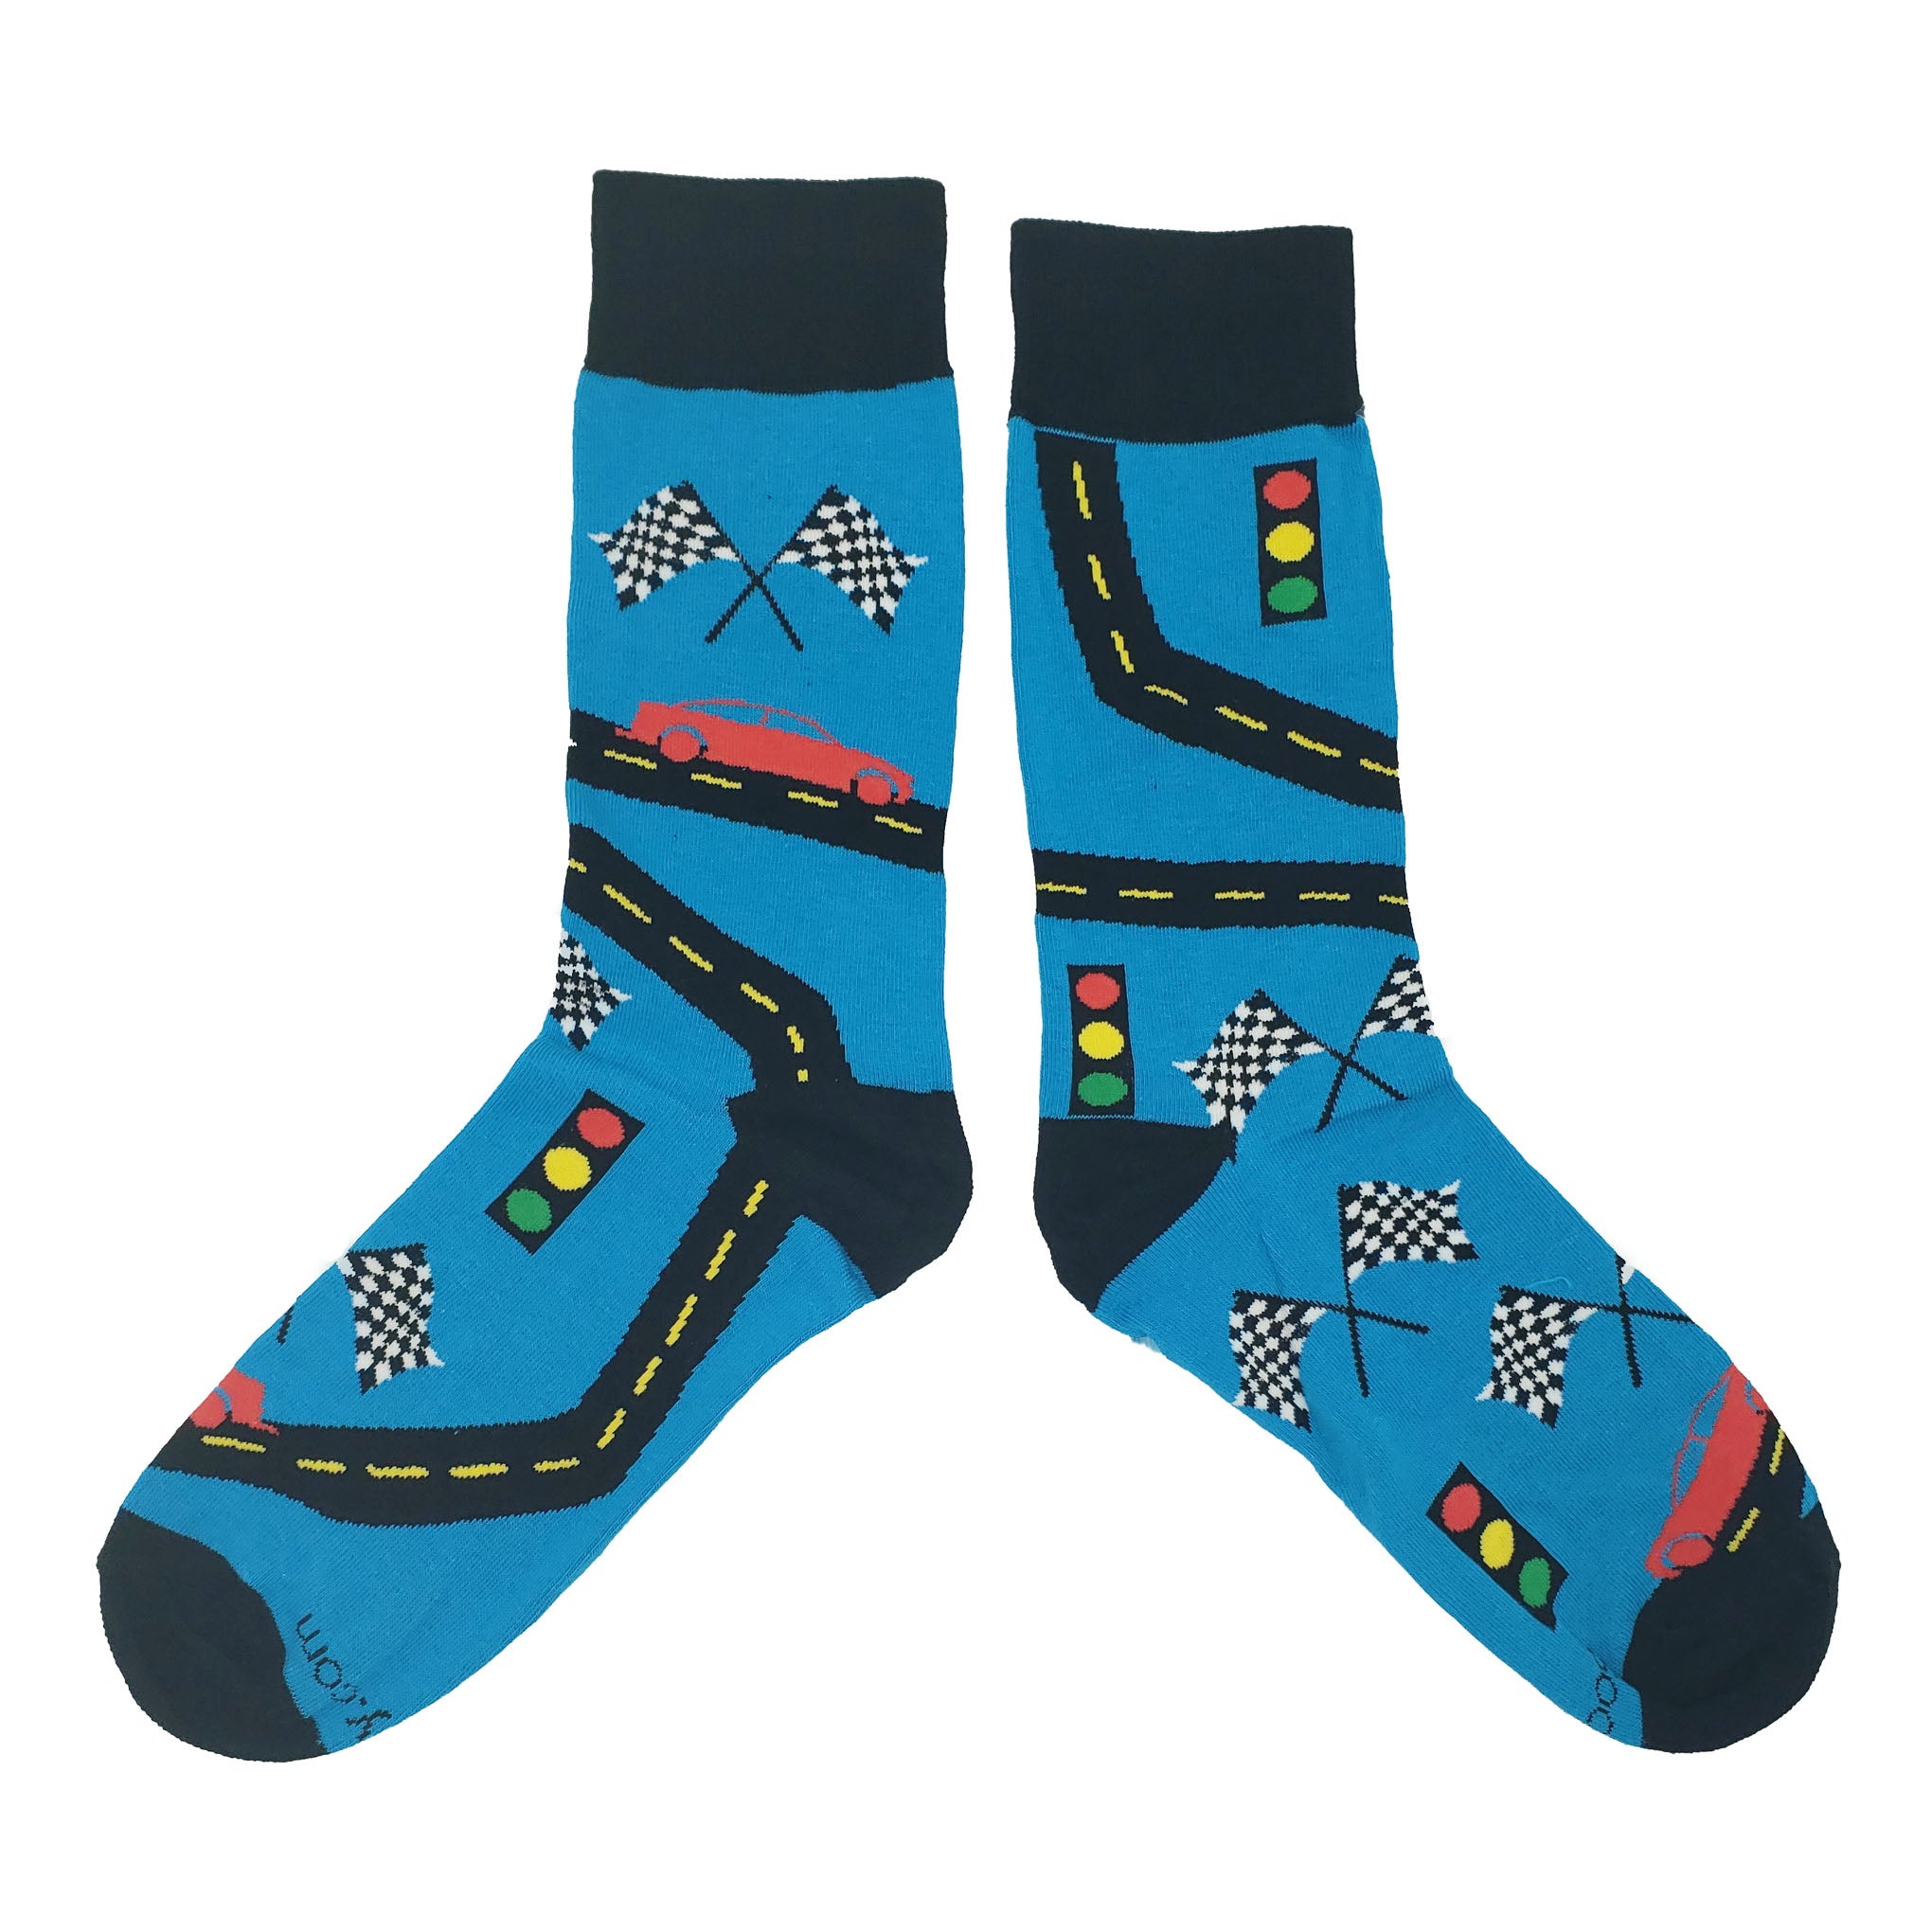 Racing Socks - Fun and Crazy Socks at Sockfly.com